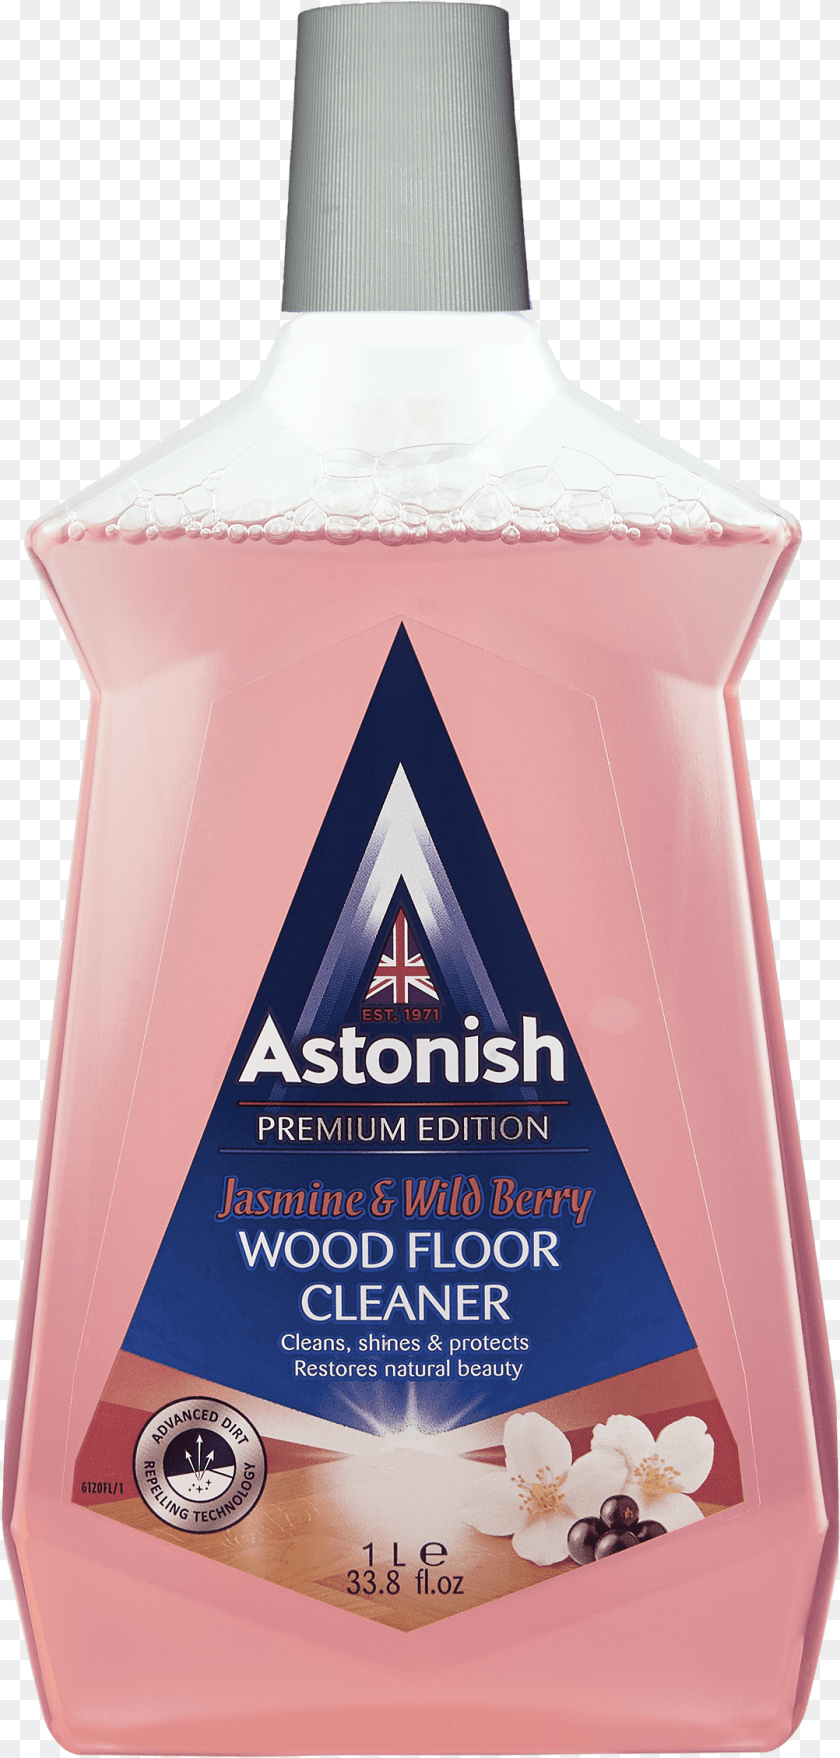 1079x2258 Premium Edition Wood Floor Cleaner Astonish Wood Floor Cleaner, Bottle, Lotion PNG